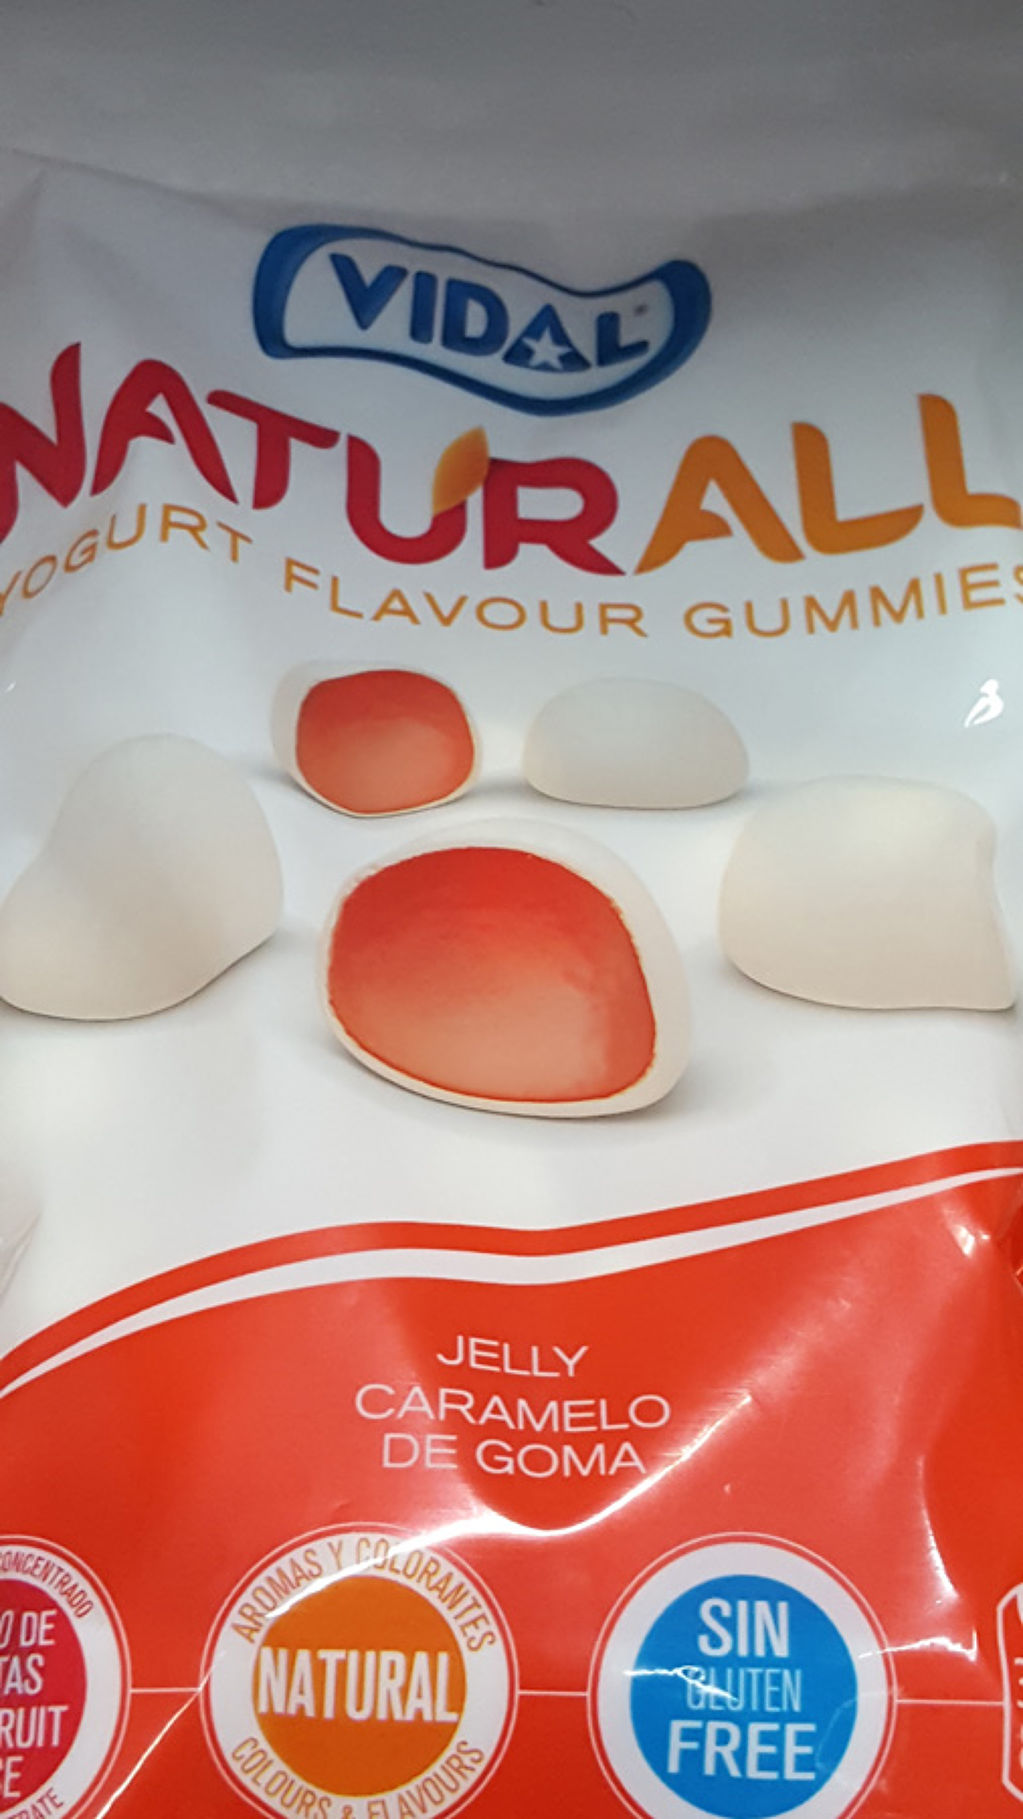 Naturall yogurt flavour gummies - 3b763-20200509_084337.jpg